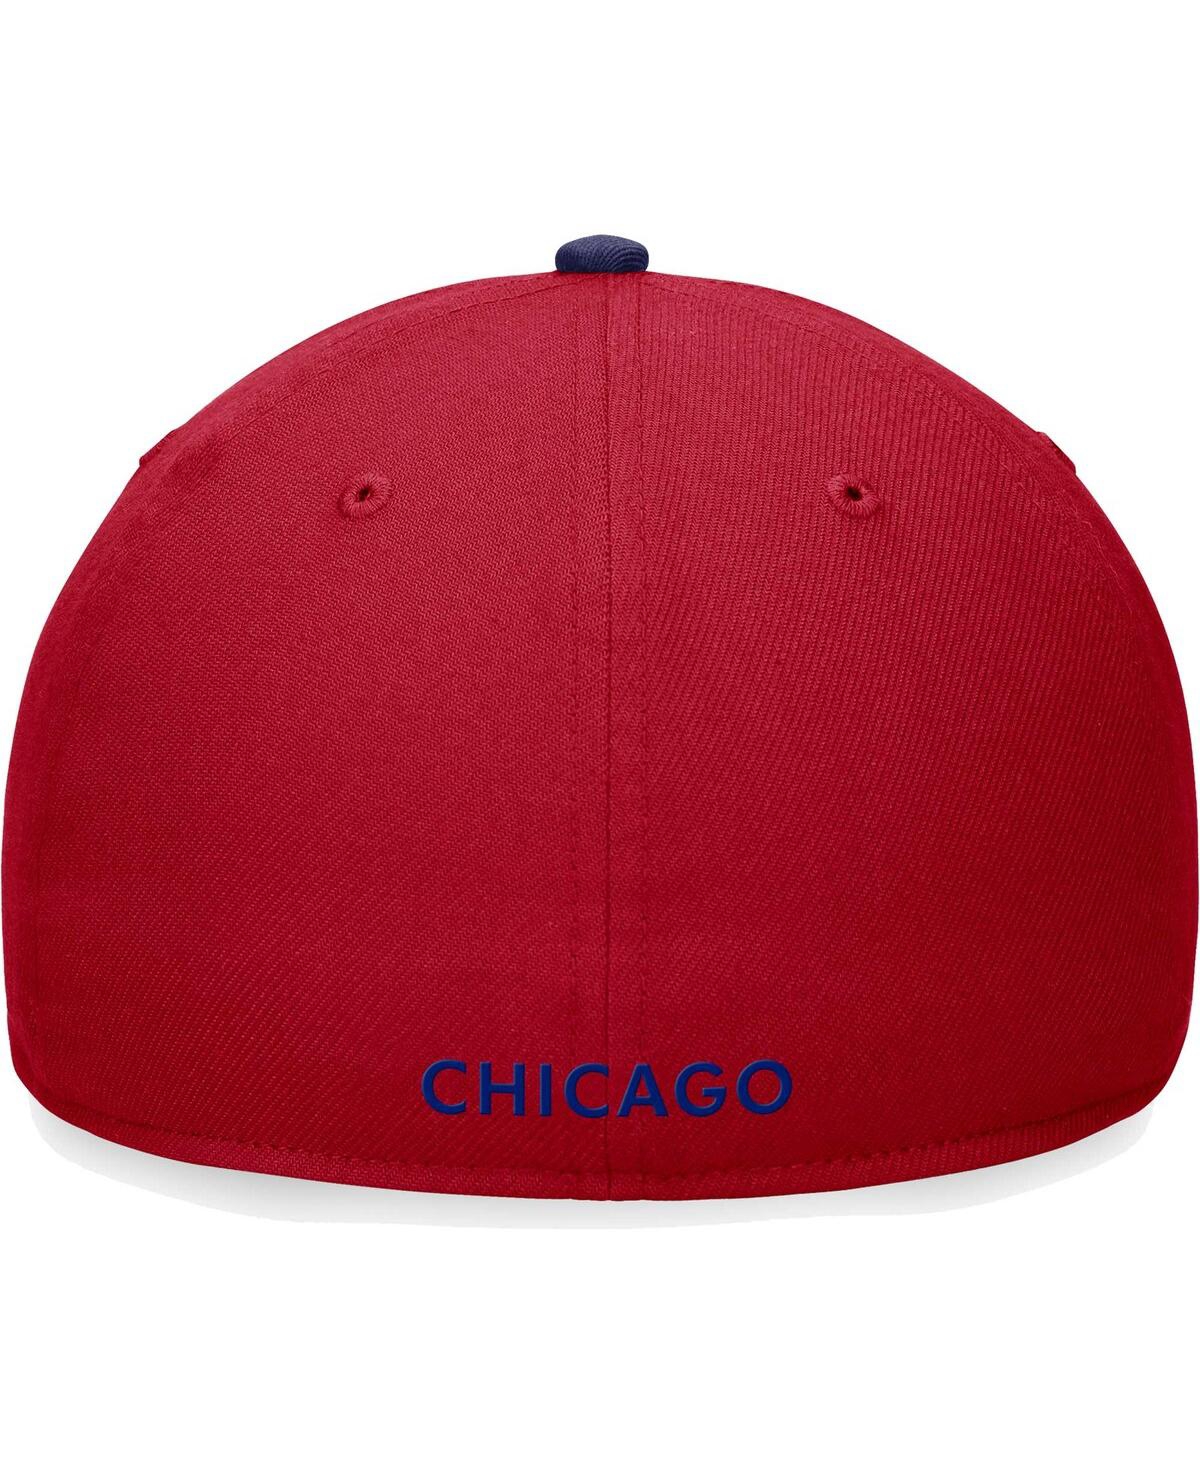 Shop Nike Men's  Red Chicago Cubs Classic99 Swoosh Performance Flex Hat